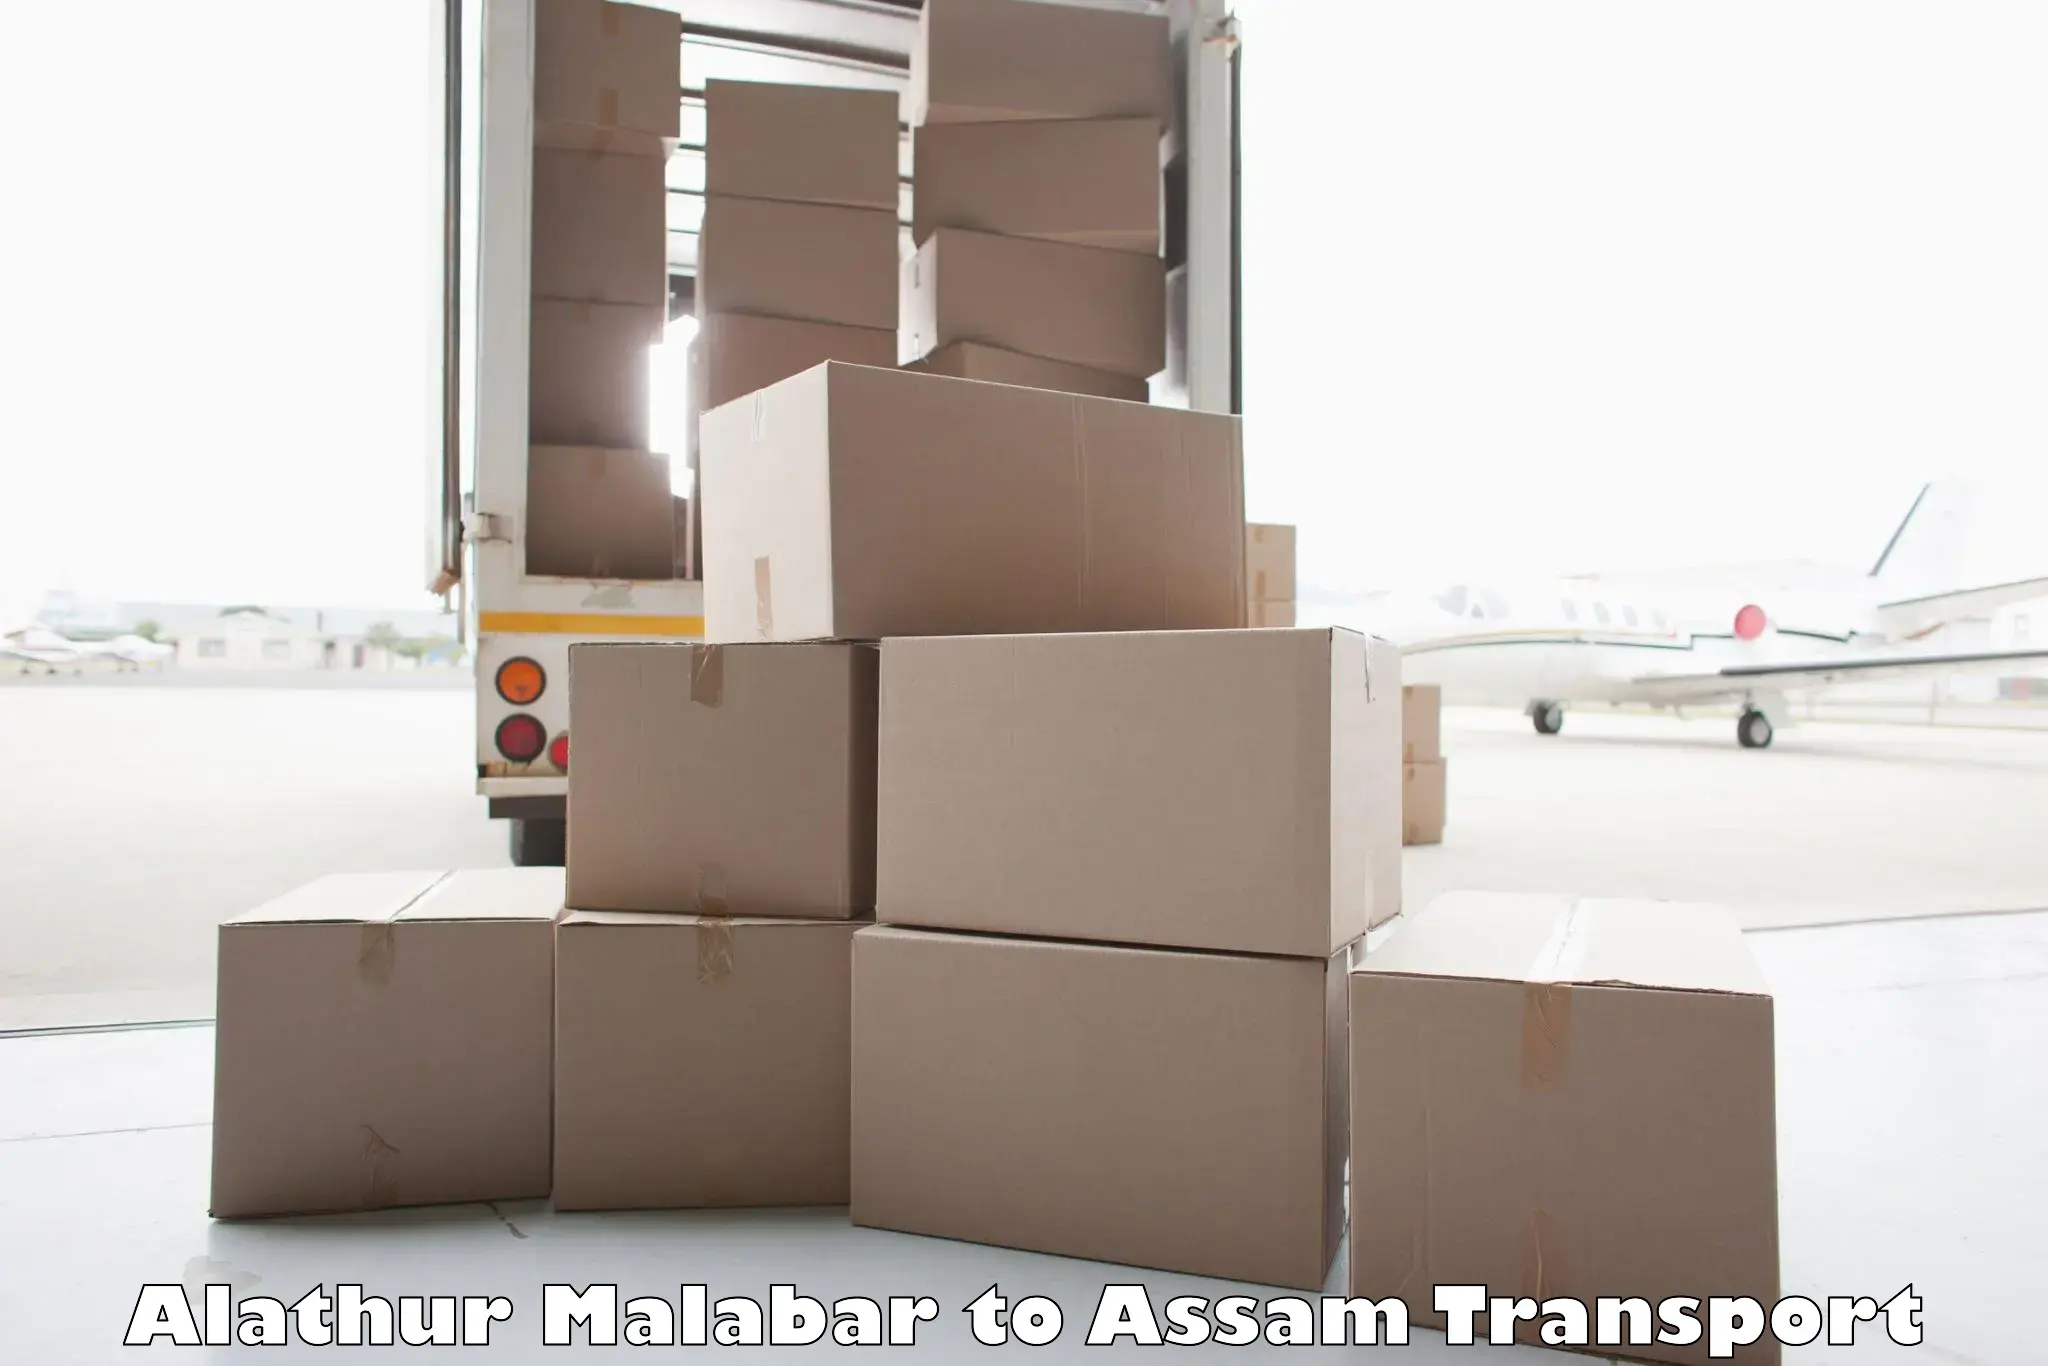 Lorry transport service Alathur Malabar to Lala Assam